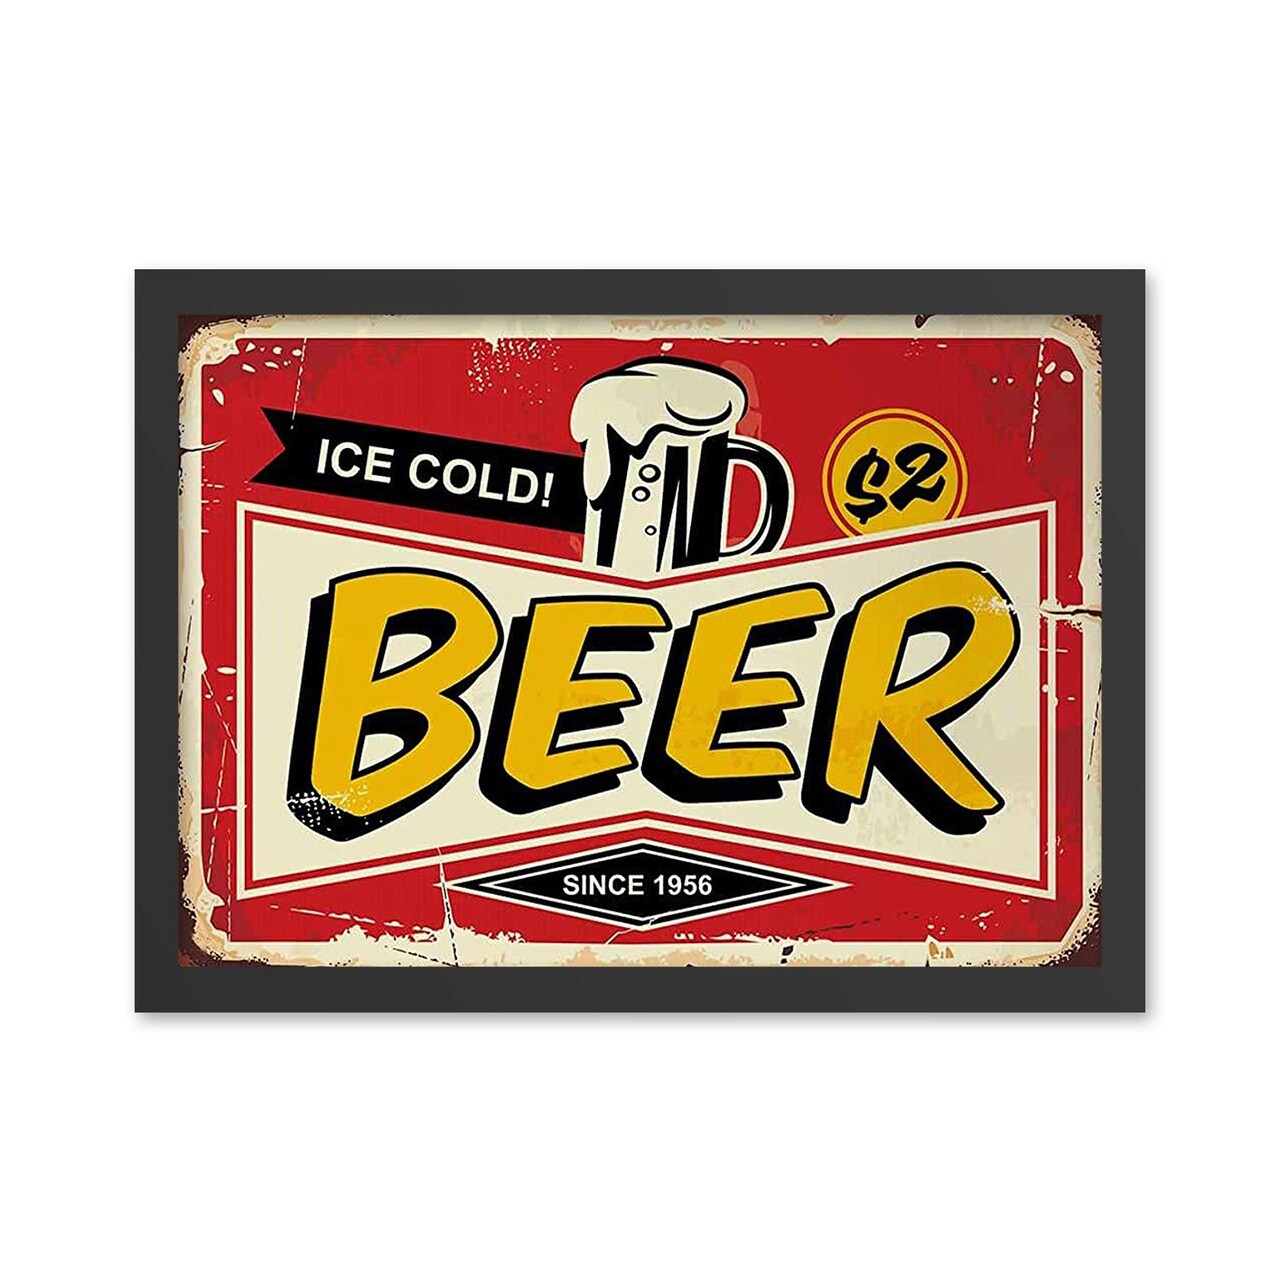 Tablou Decorativ, Ice Cold Beer 2 (35 X 45), MDF , Polistiren, Roșu / Galben / Negru / Crem